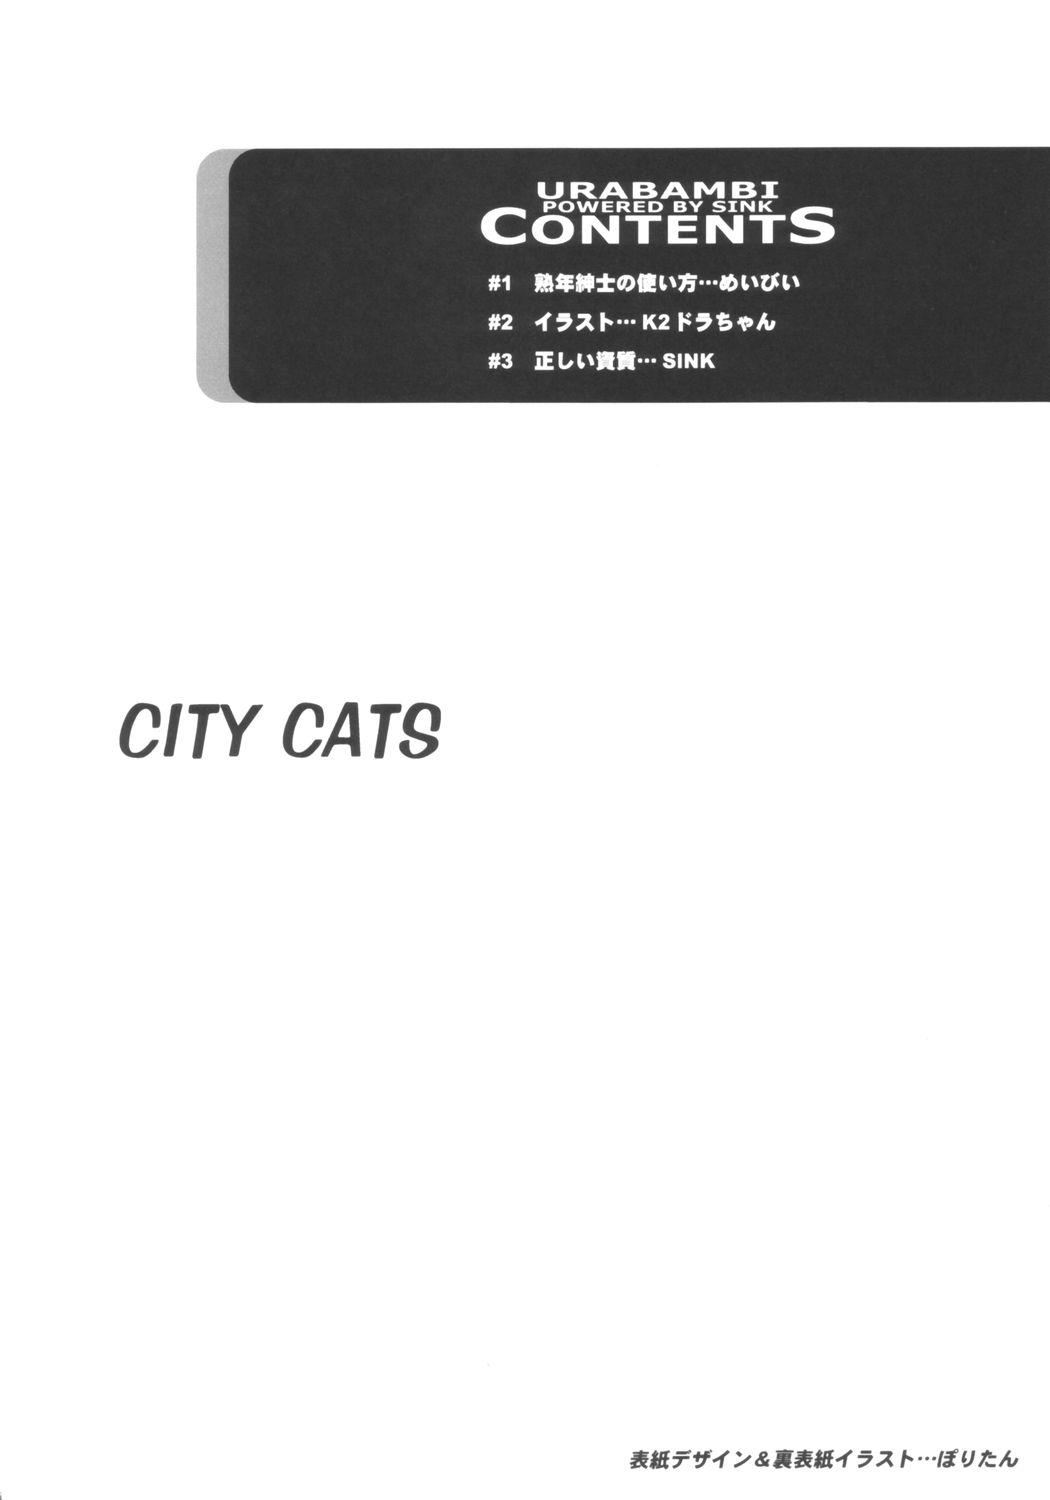 Urabambi Vol. 21 - City Cats 2